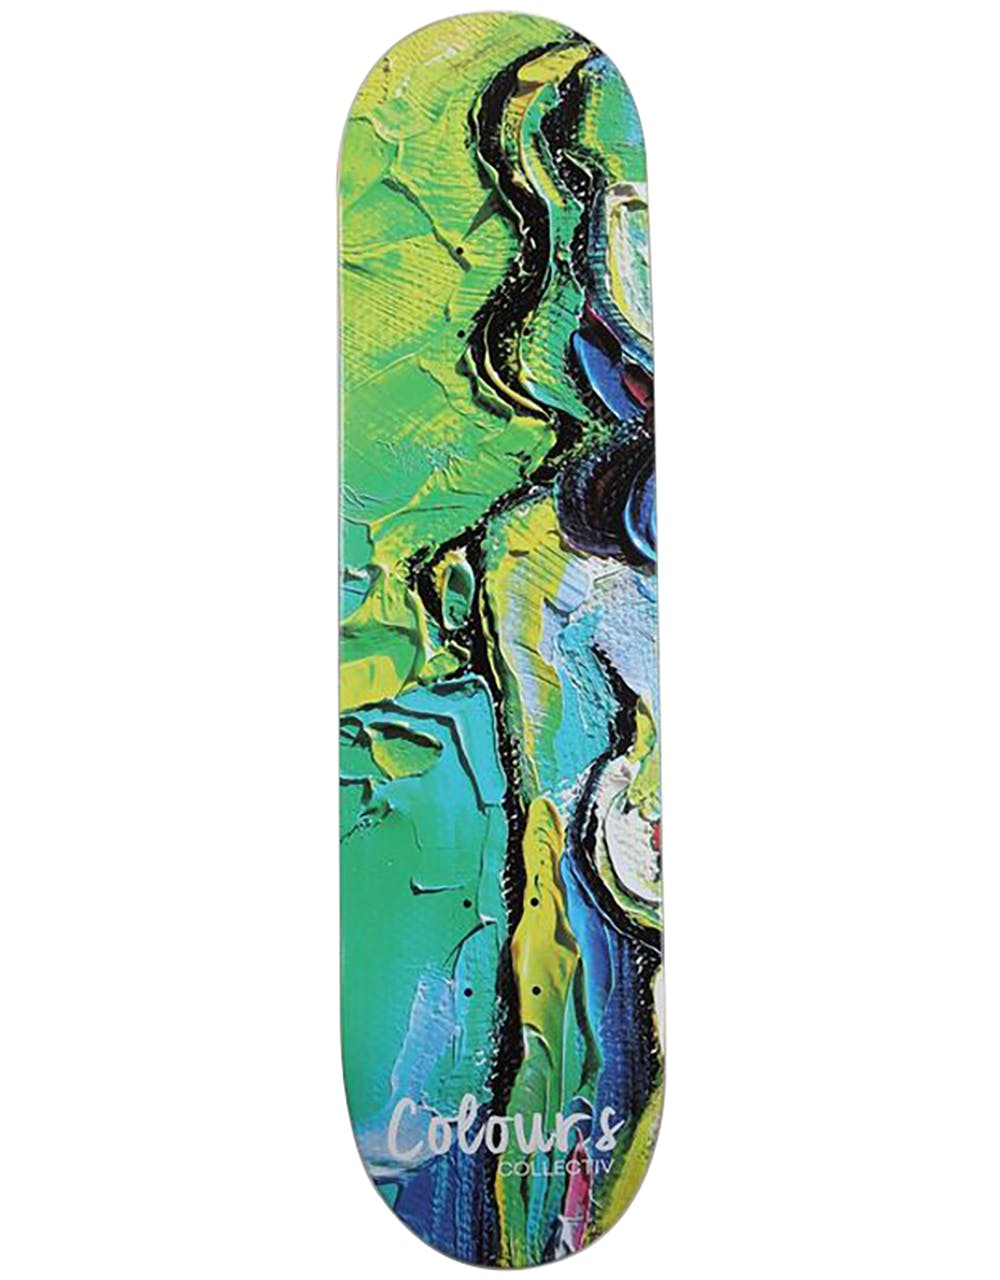 Colours Collectiv Fluid 83 Skateboard Deck - 8.3"